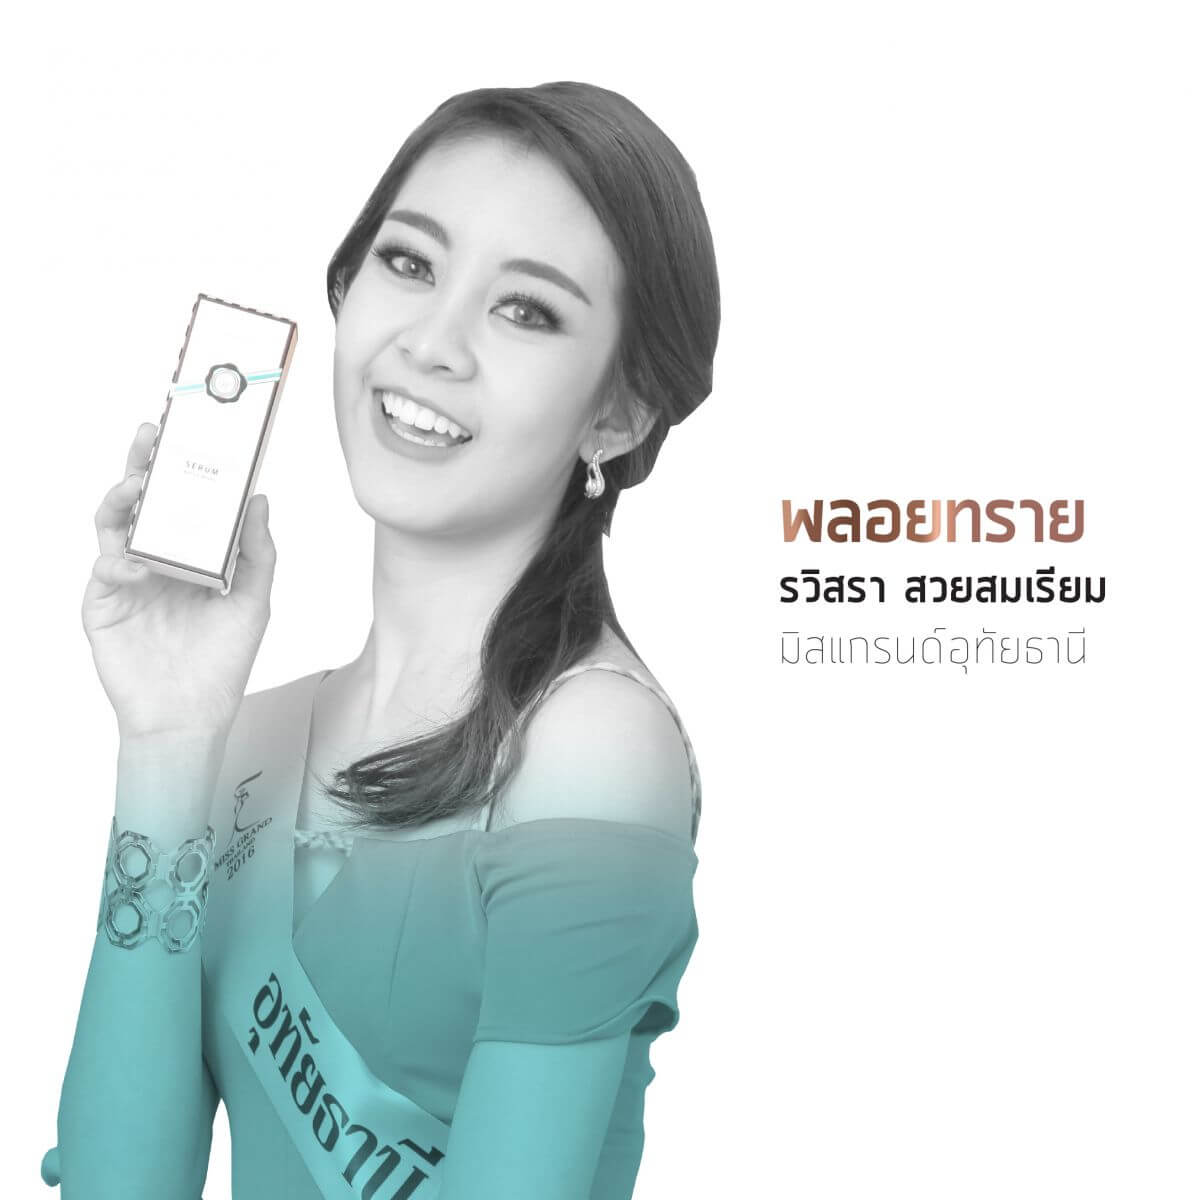 Miss Grand Thailand 2016